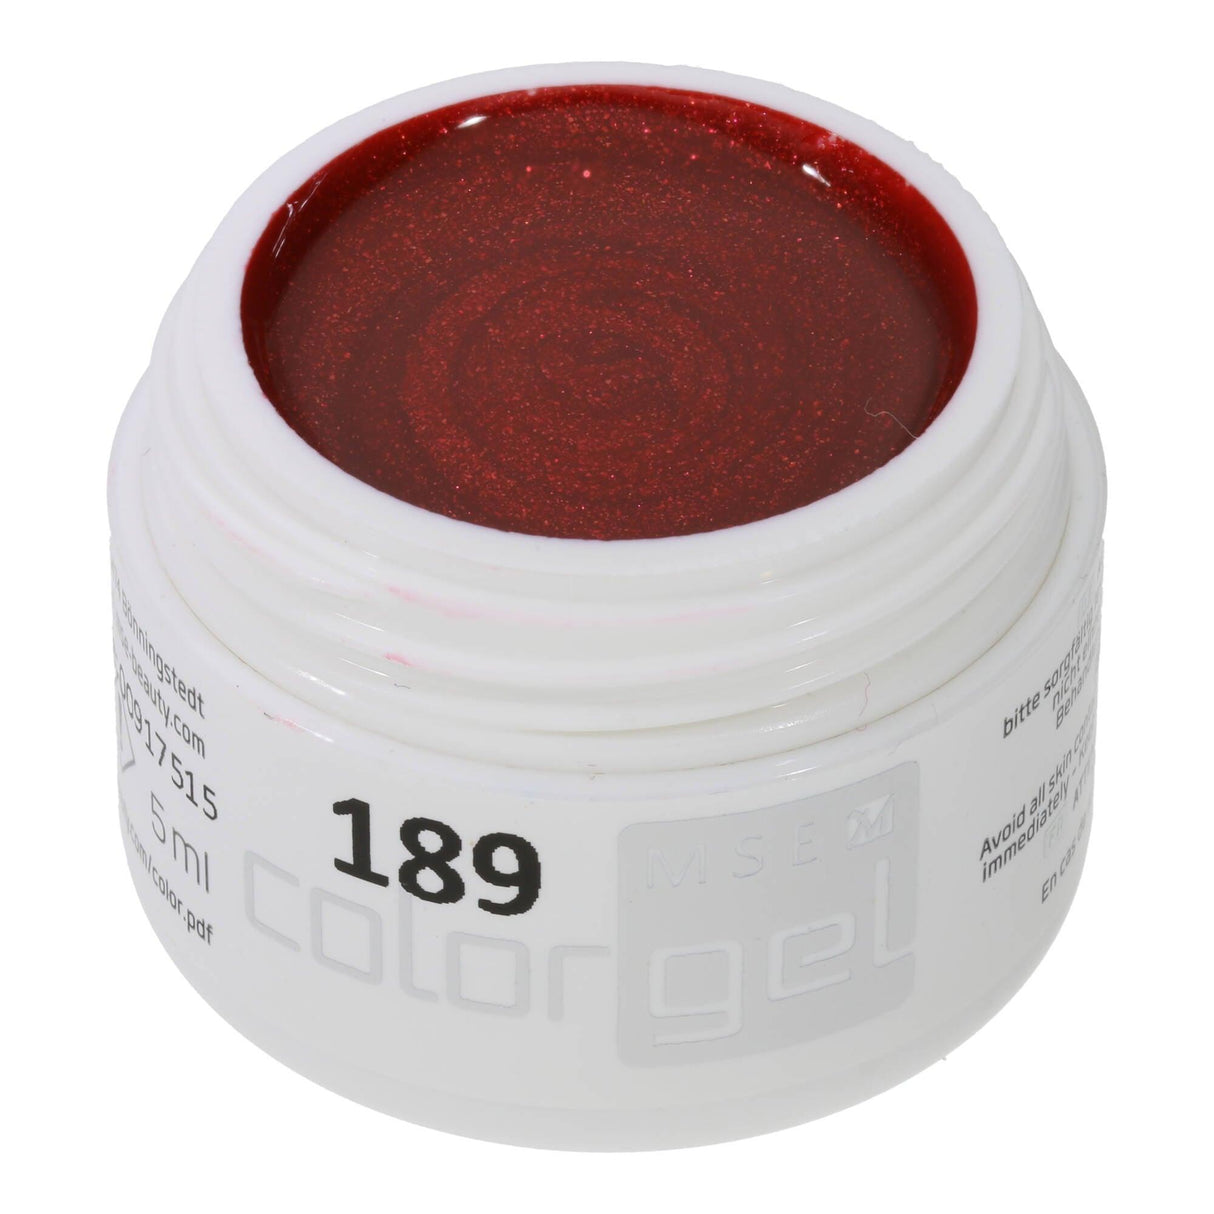 #189 Premium-EFFEKT Color Gel 5ml Kräftiges Rot mit ausgeprägtem rosa-rotem Perlglanz - MSE - The Beauty Company